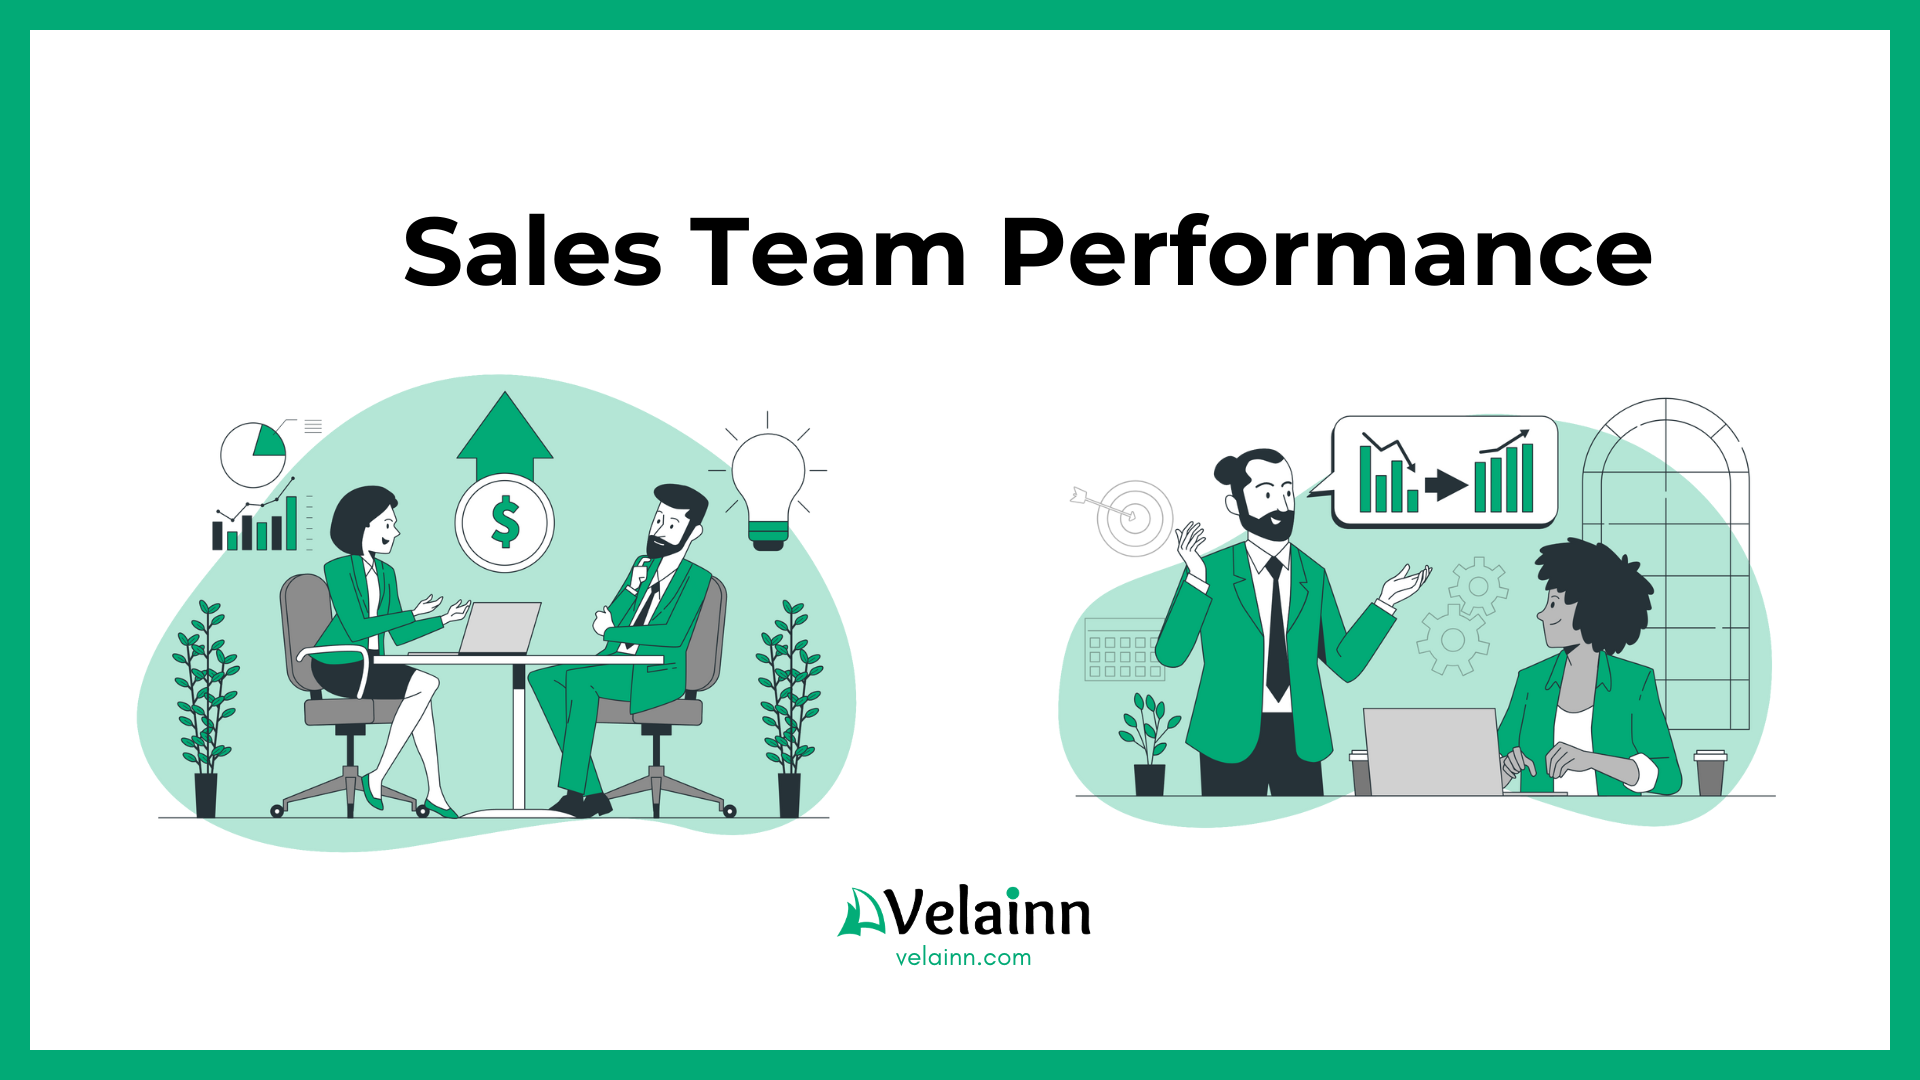 Tracking Sales Team Performance with Velainn